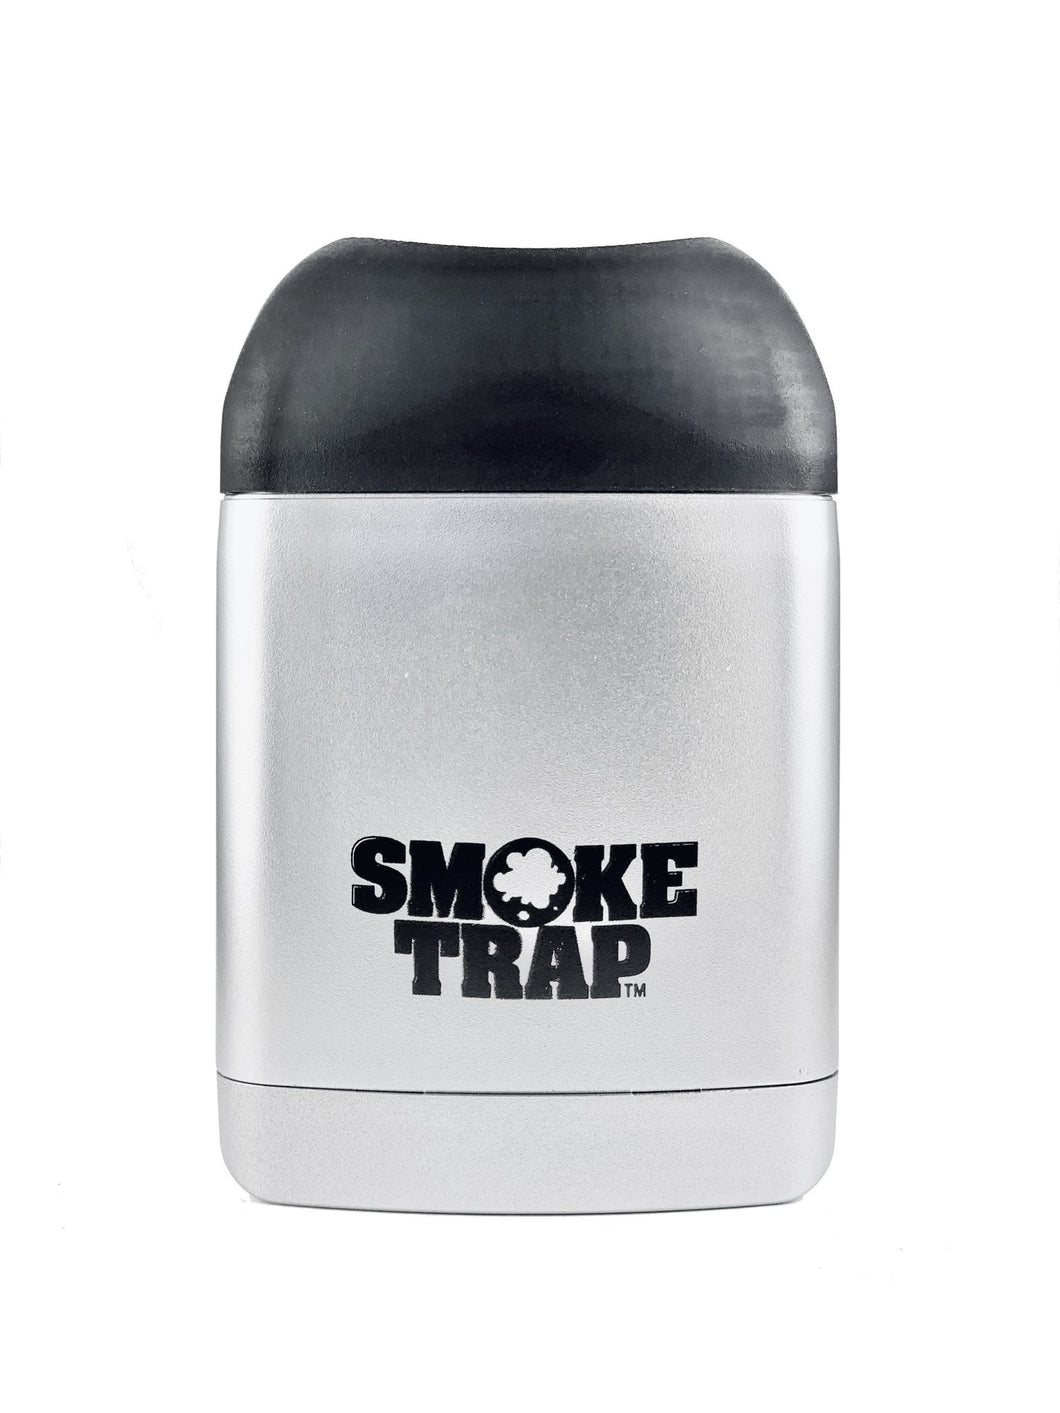 Smoke Trap - Your discreet indoor smoking solution! 🤫 . #smoketrap